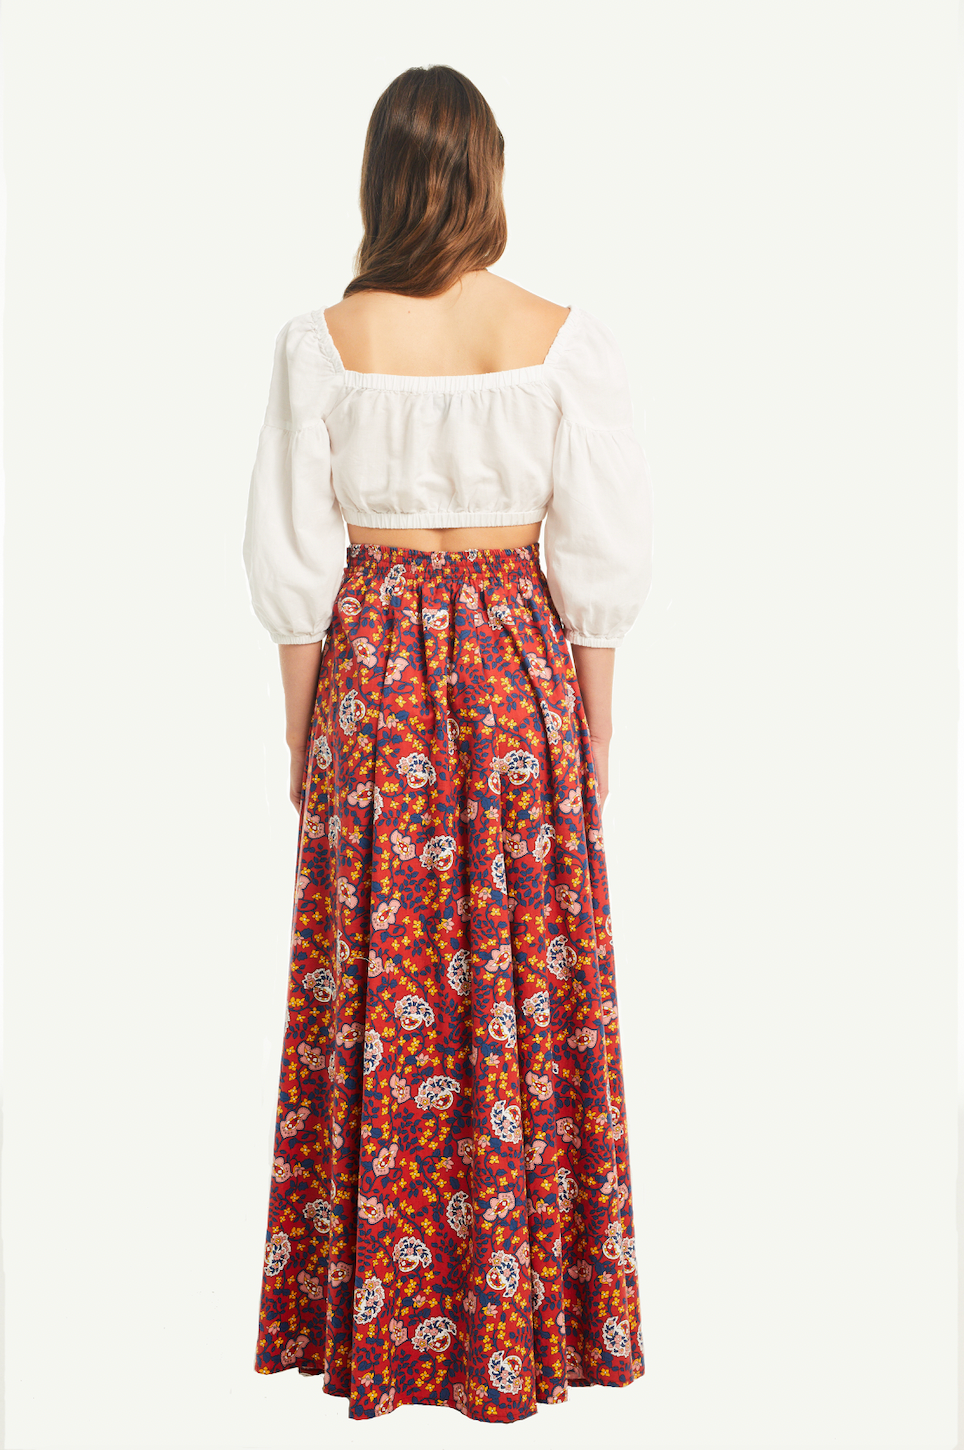 FIORDALISA - long cotton skirt in Ephrussi pattern